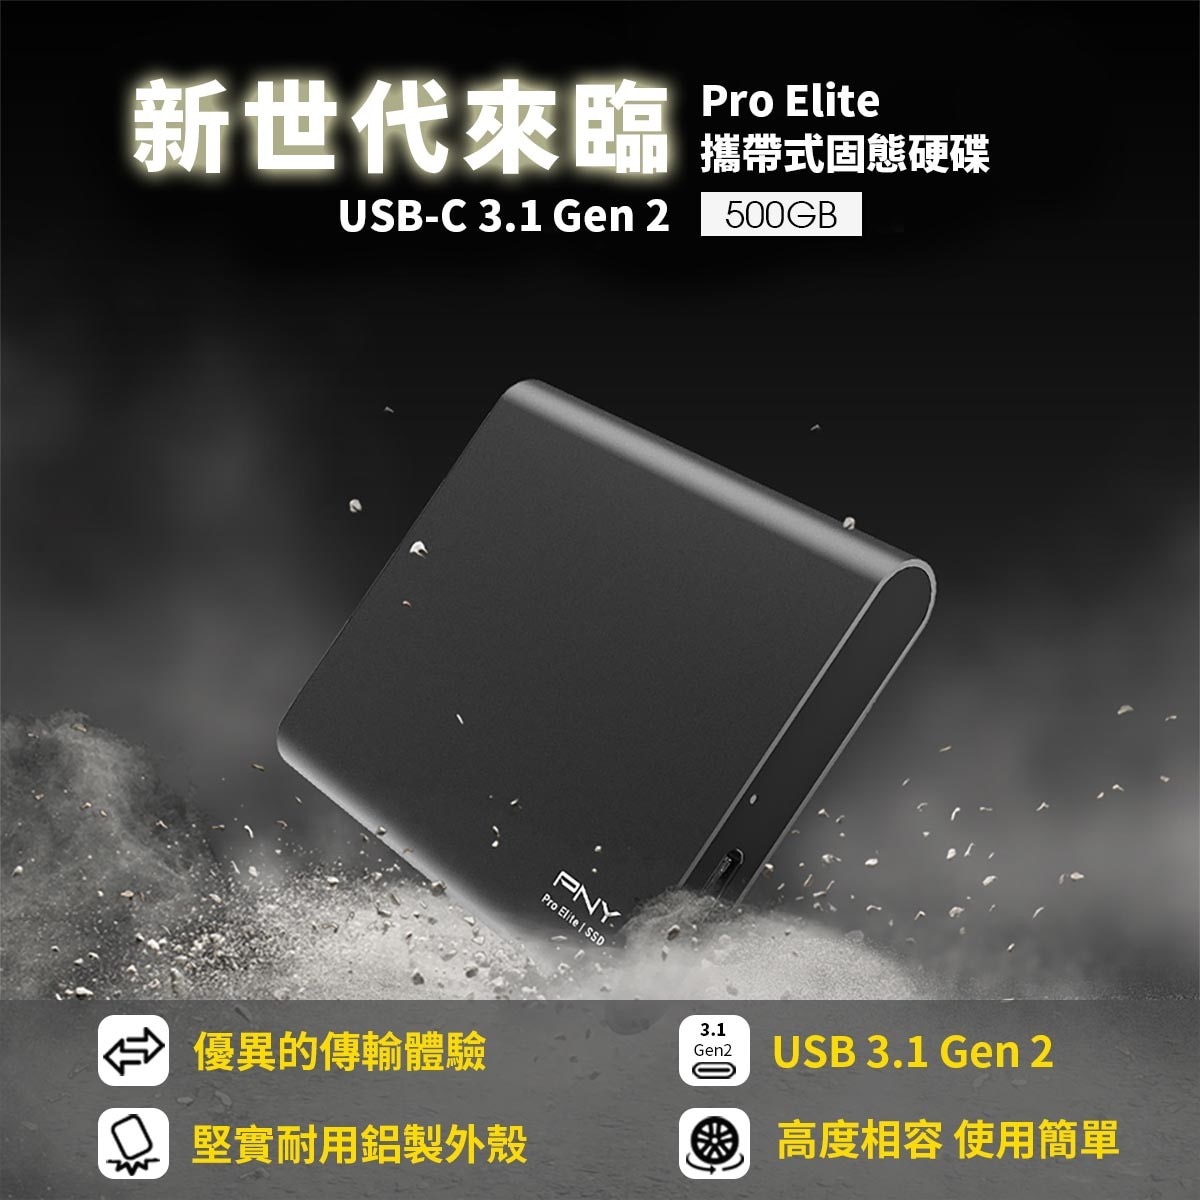 PNY Pro Elite 500GB 攜帶式固態硬碟，USB3.1 Gen 2的絕佳傳輸表現，堅實耐用的鋁製外殼，高度相容使用簡單。